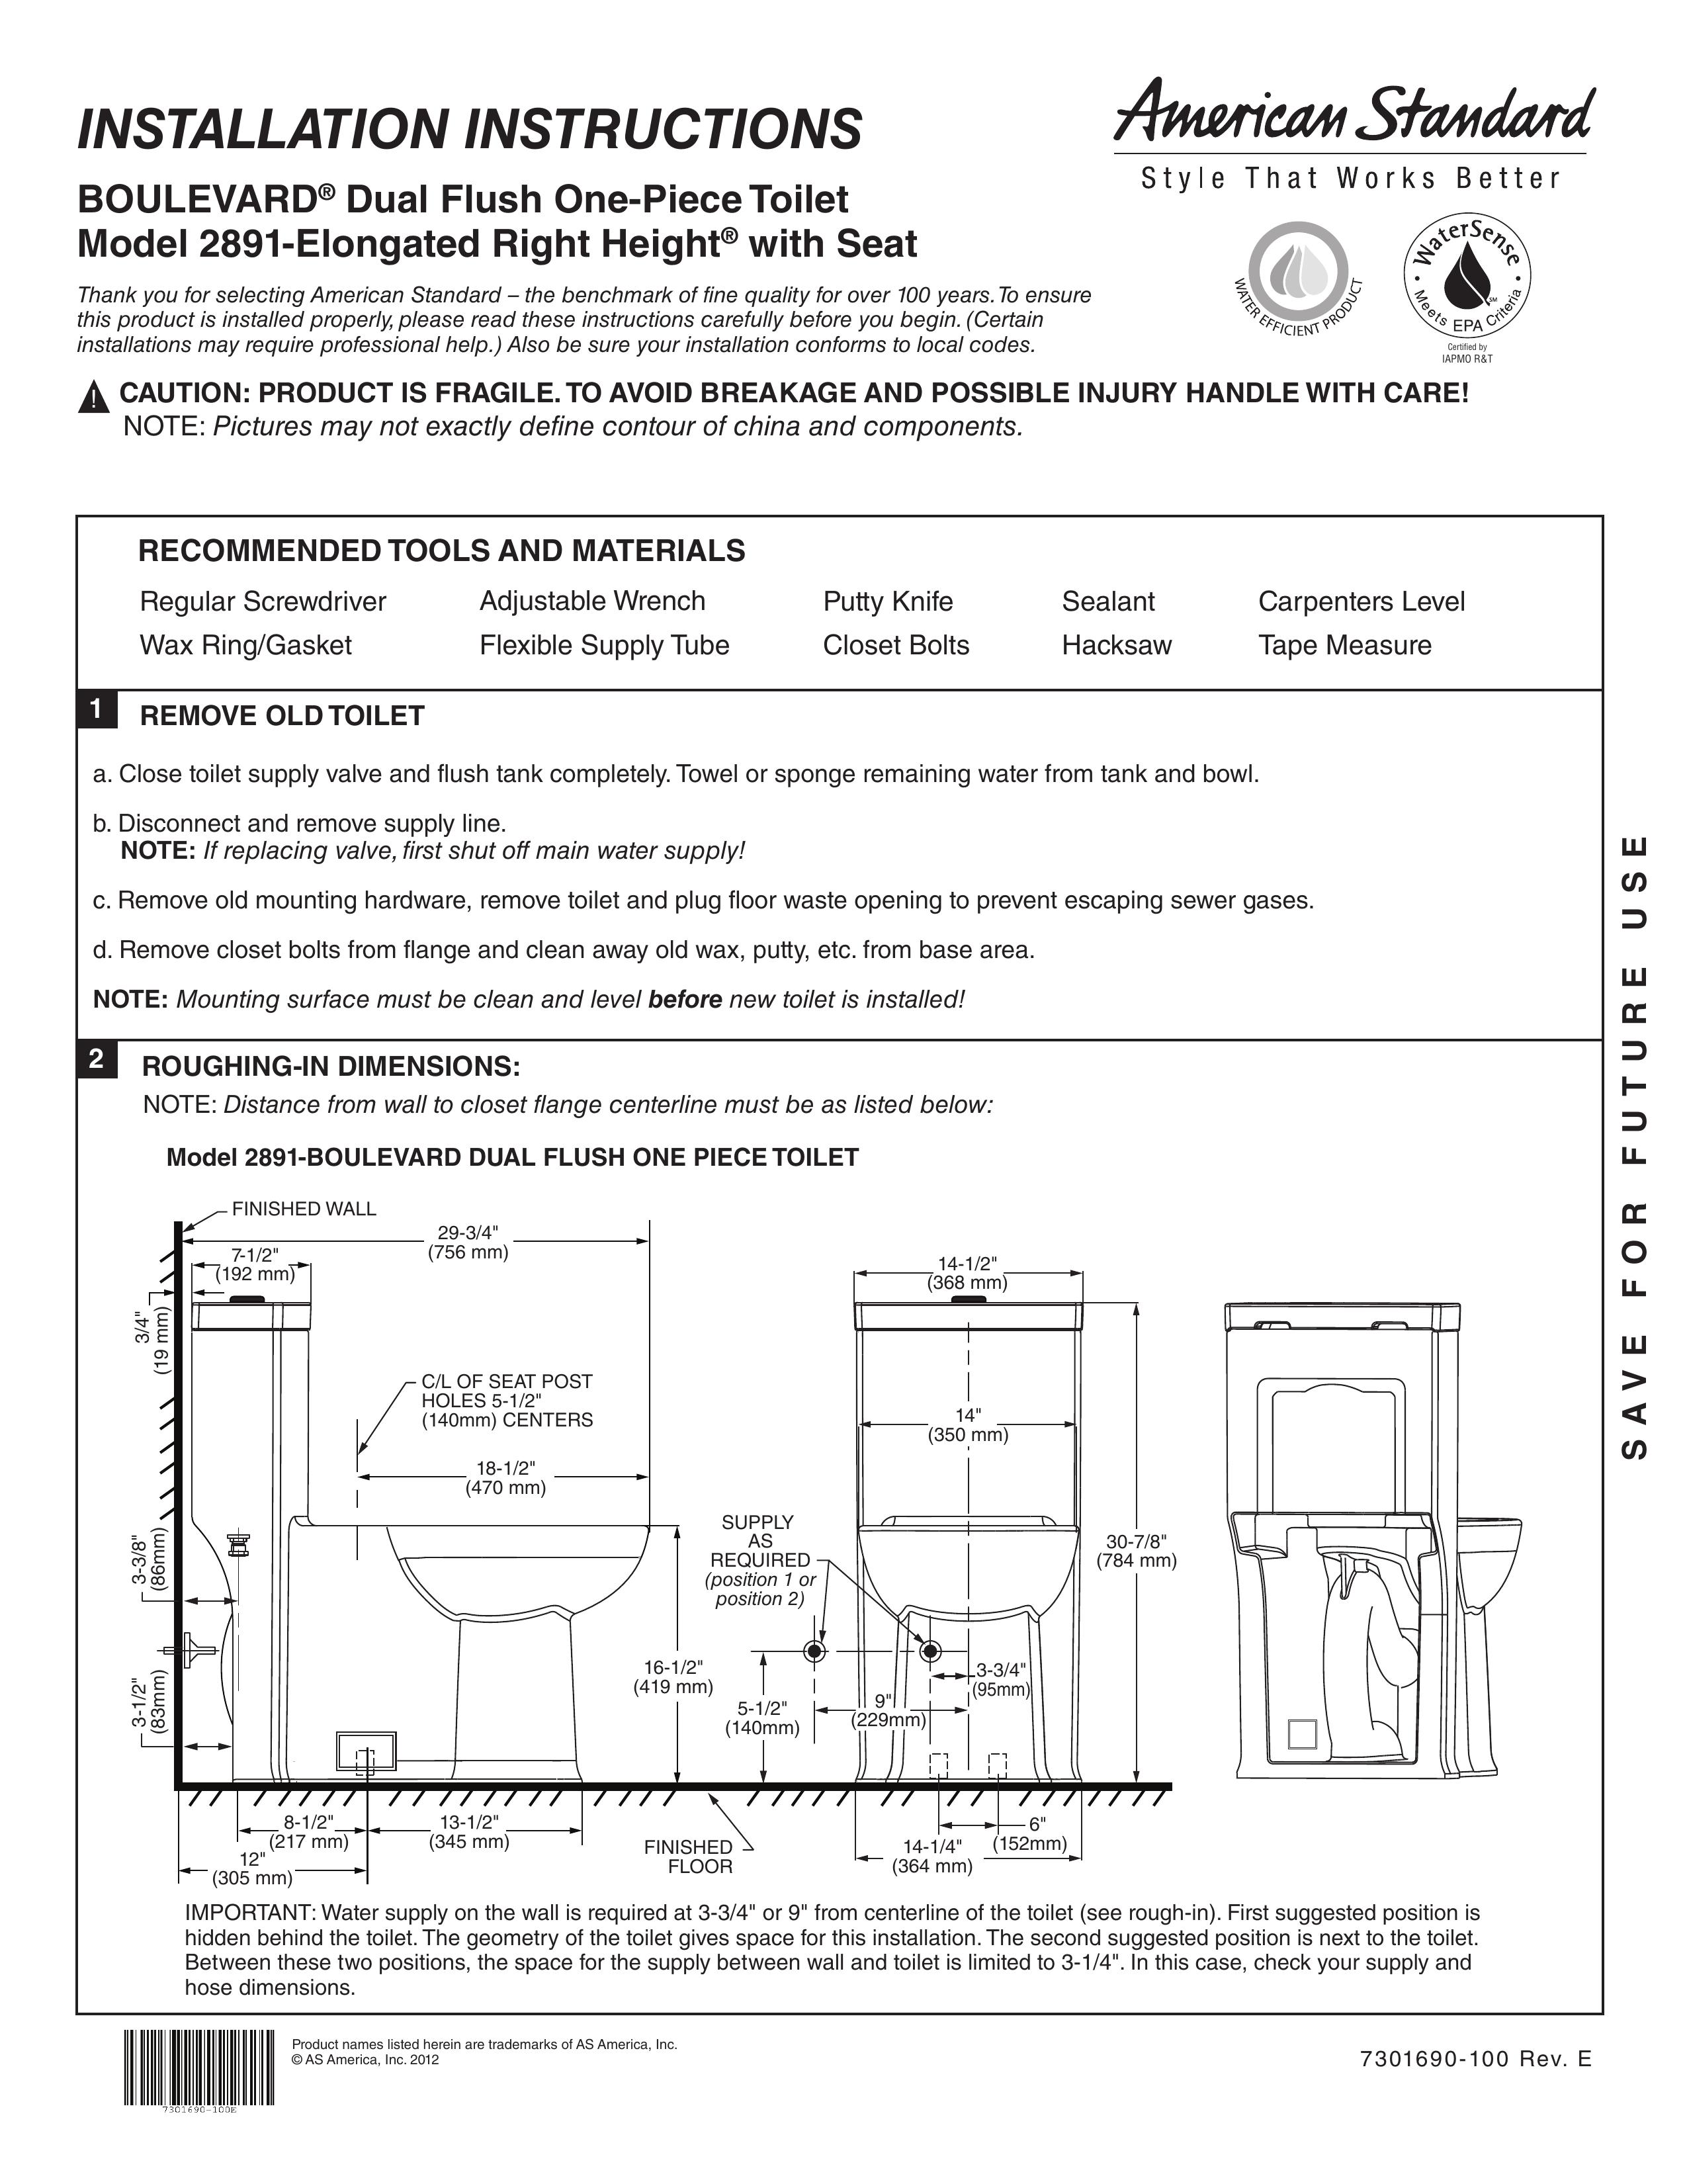 American Standard BOULEVARD Dual Flush One-Piece Toilet Multi-tool User Manual